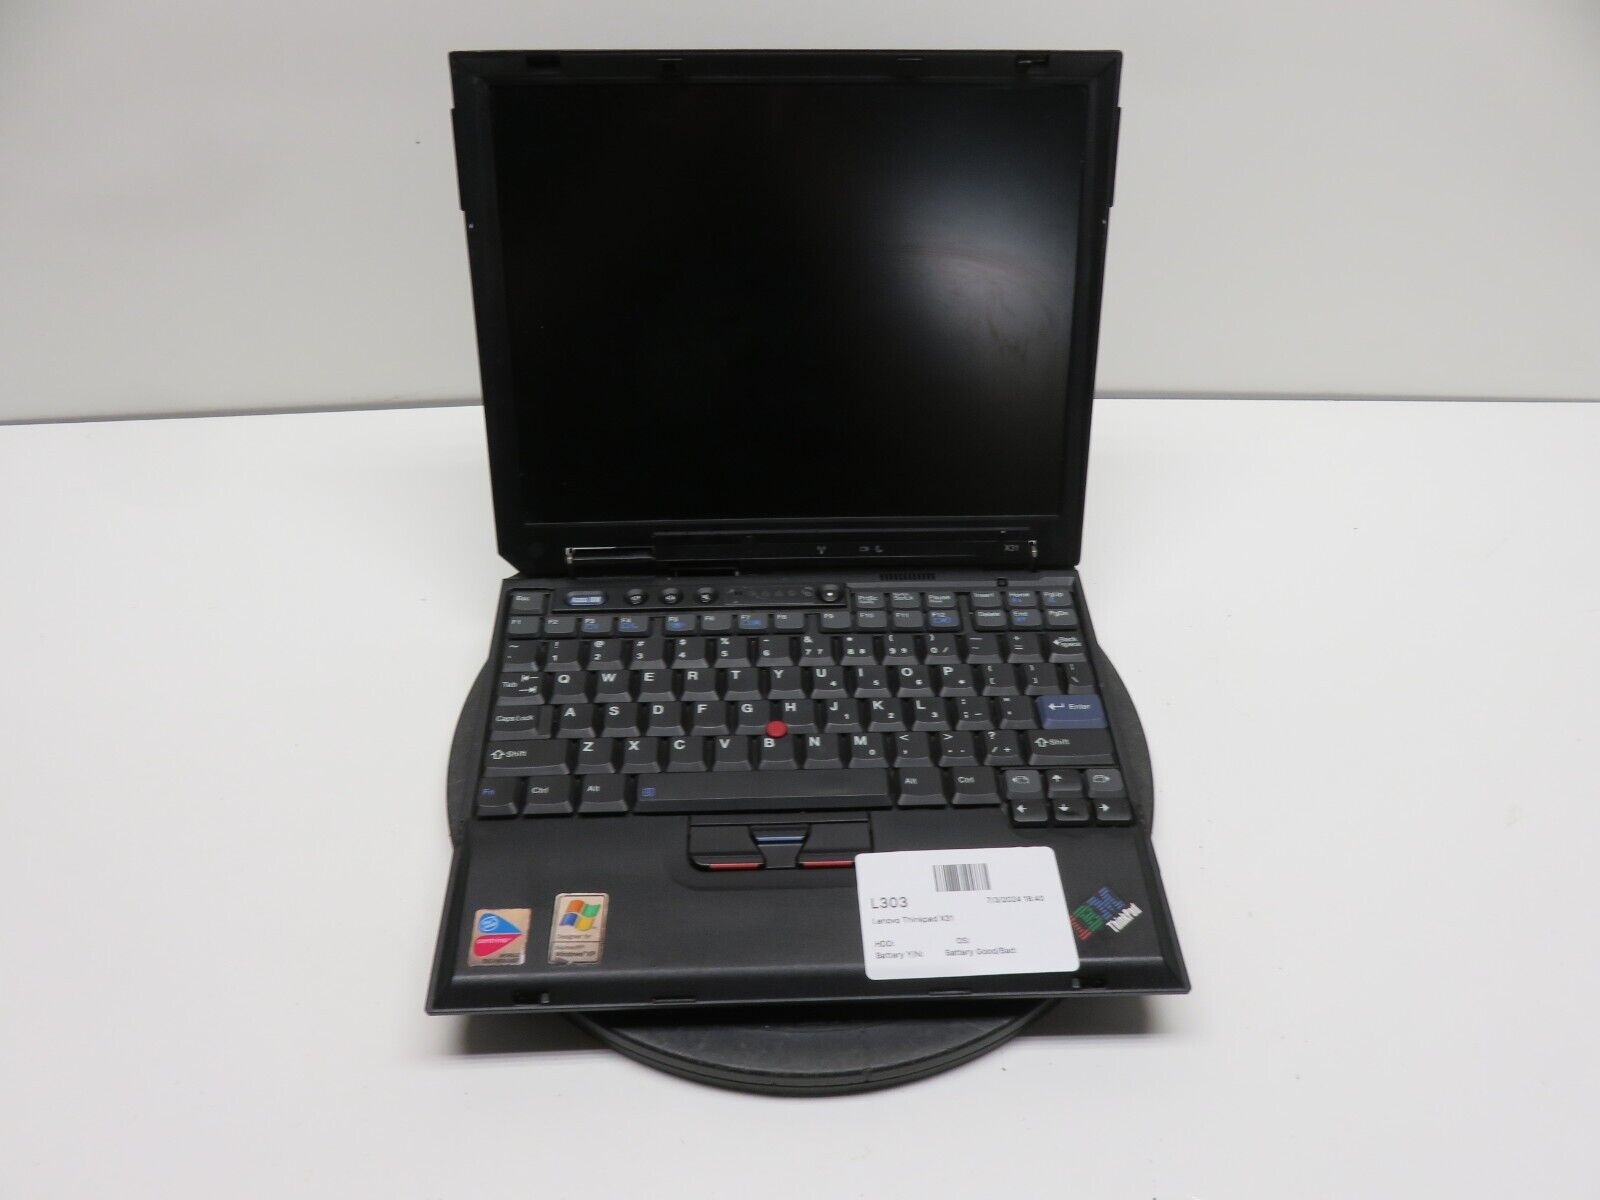 IBM Thinkpad X31 Laptop - Parts/Repair - No Ram, HDD, or Battery - No Power